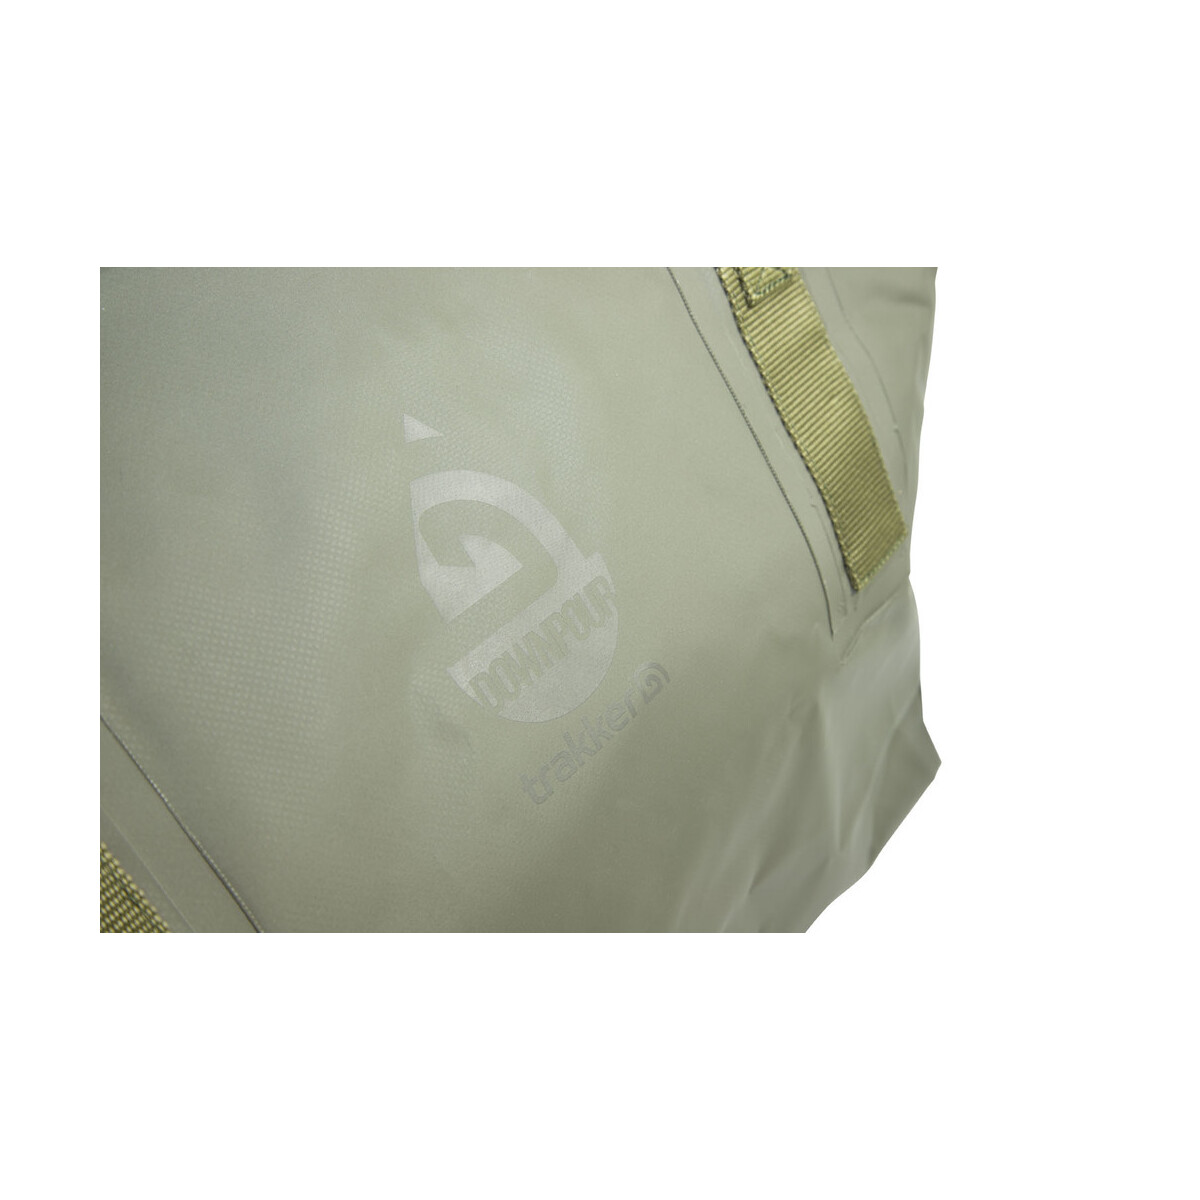 Trakker Downpour Roll-Up Carryall 205101 Tasche für angler praktisch ansehen 